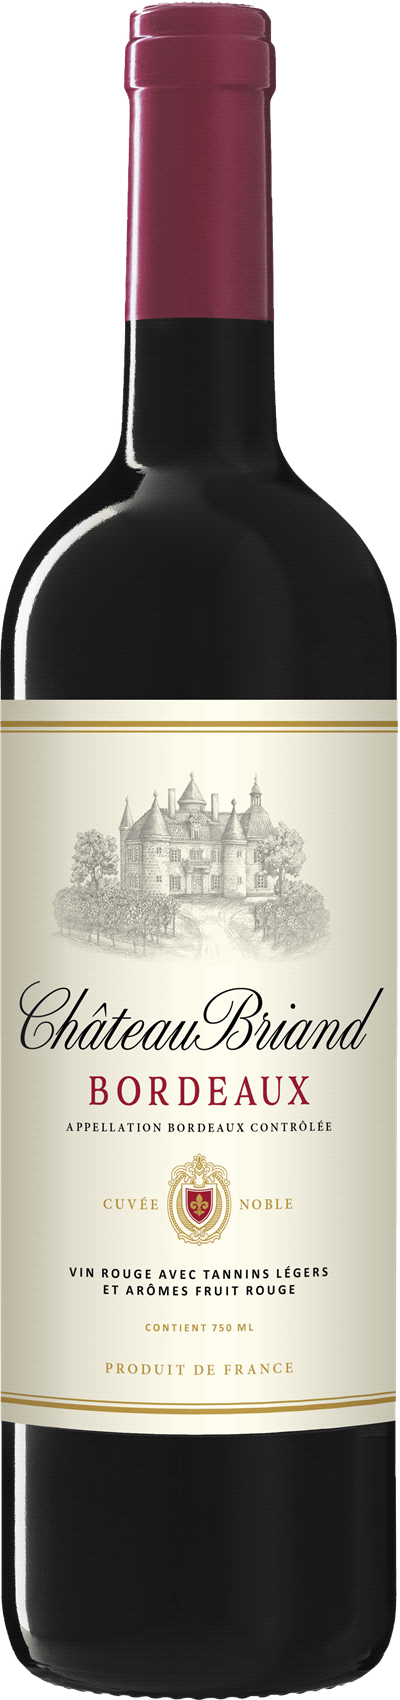 Château Briand 